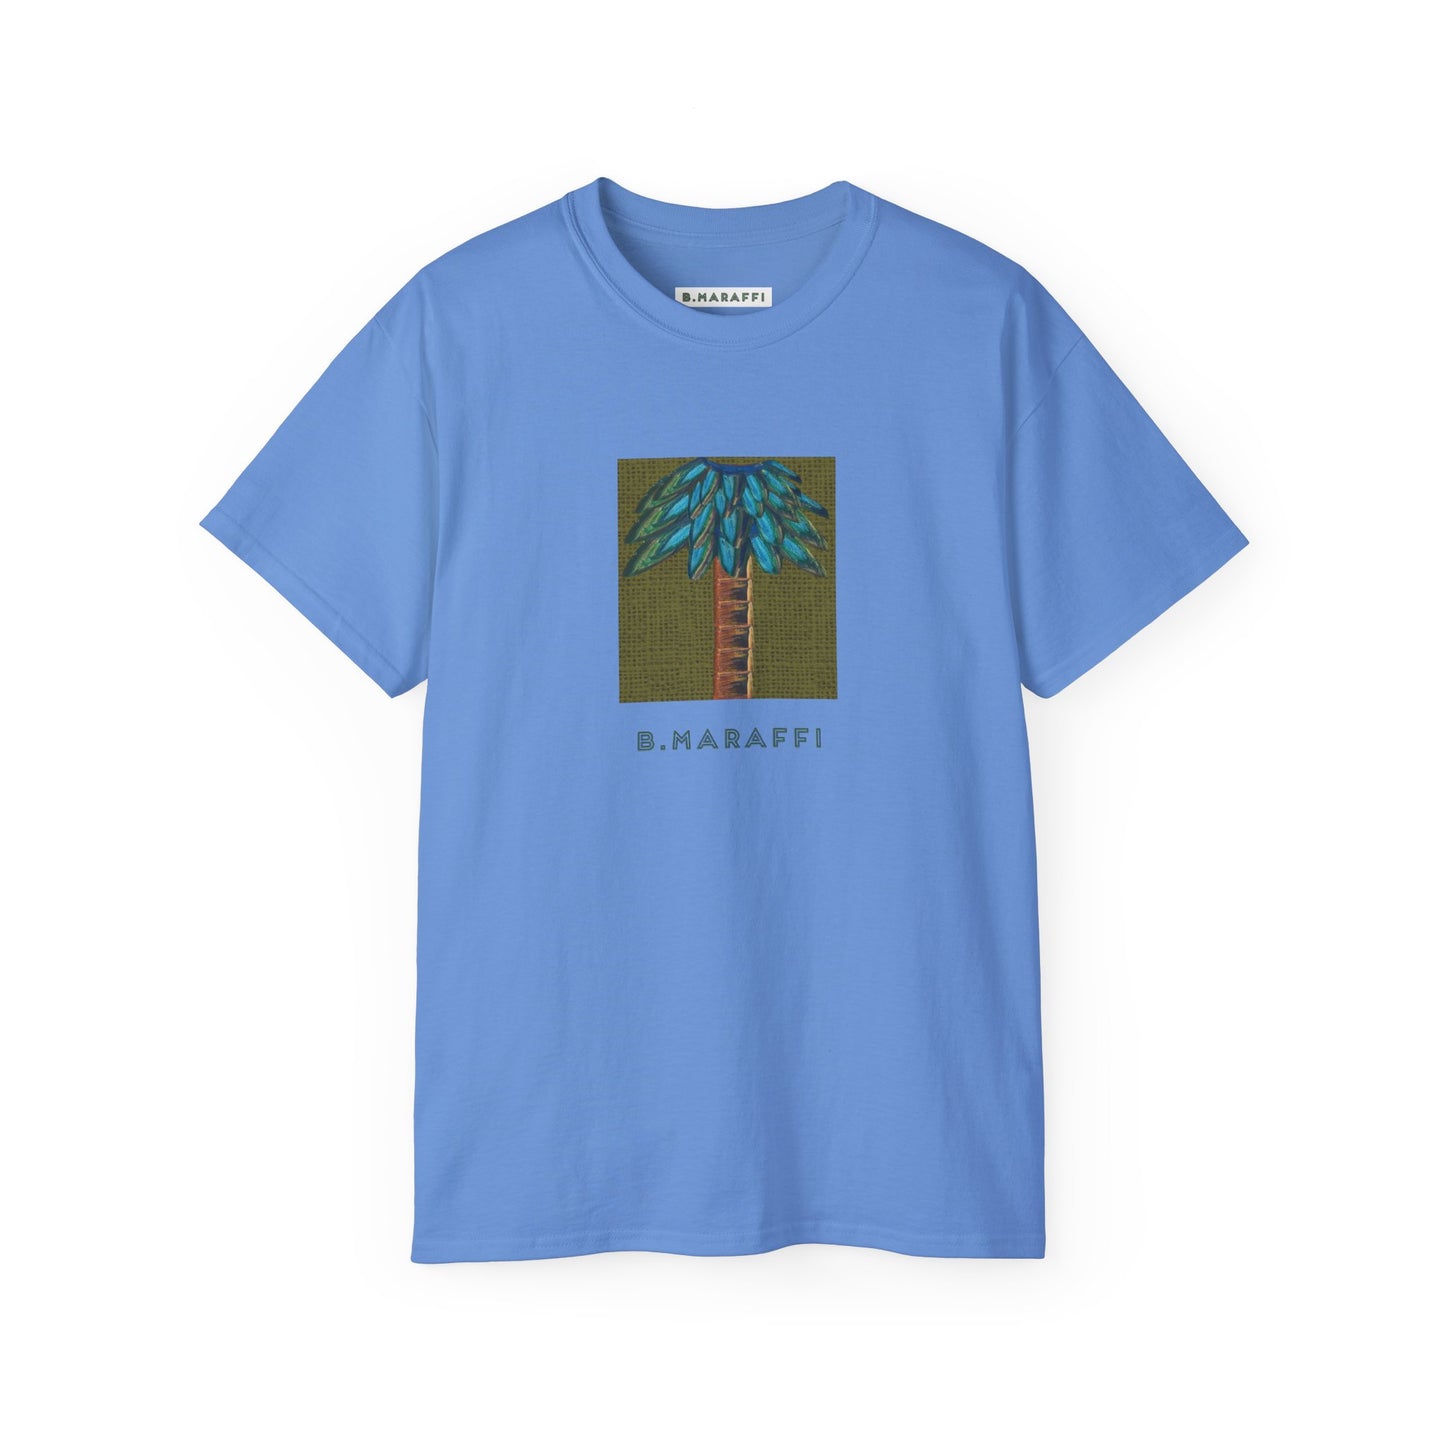 B.Maraffi Cotton T-shirt - Tiki Palm Olive